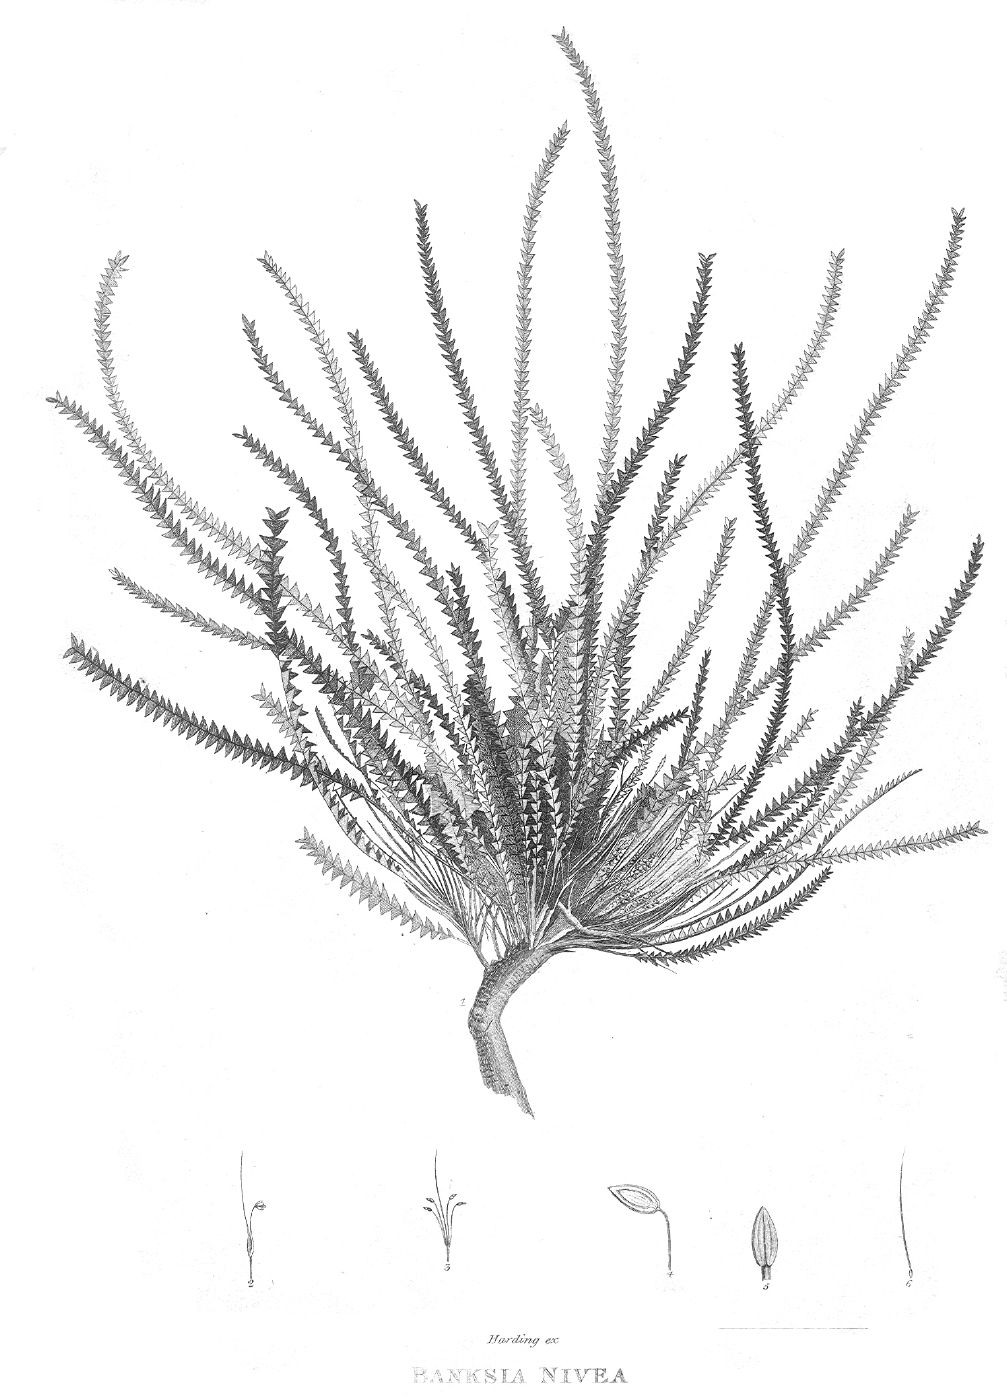 Proteaceae Dryandra nivea